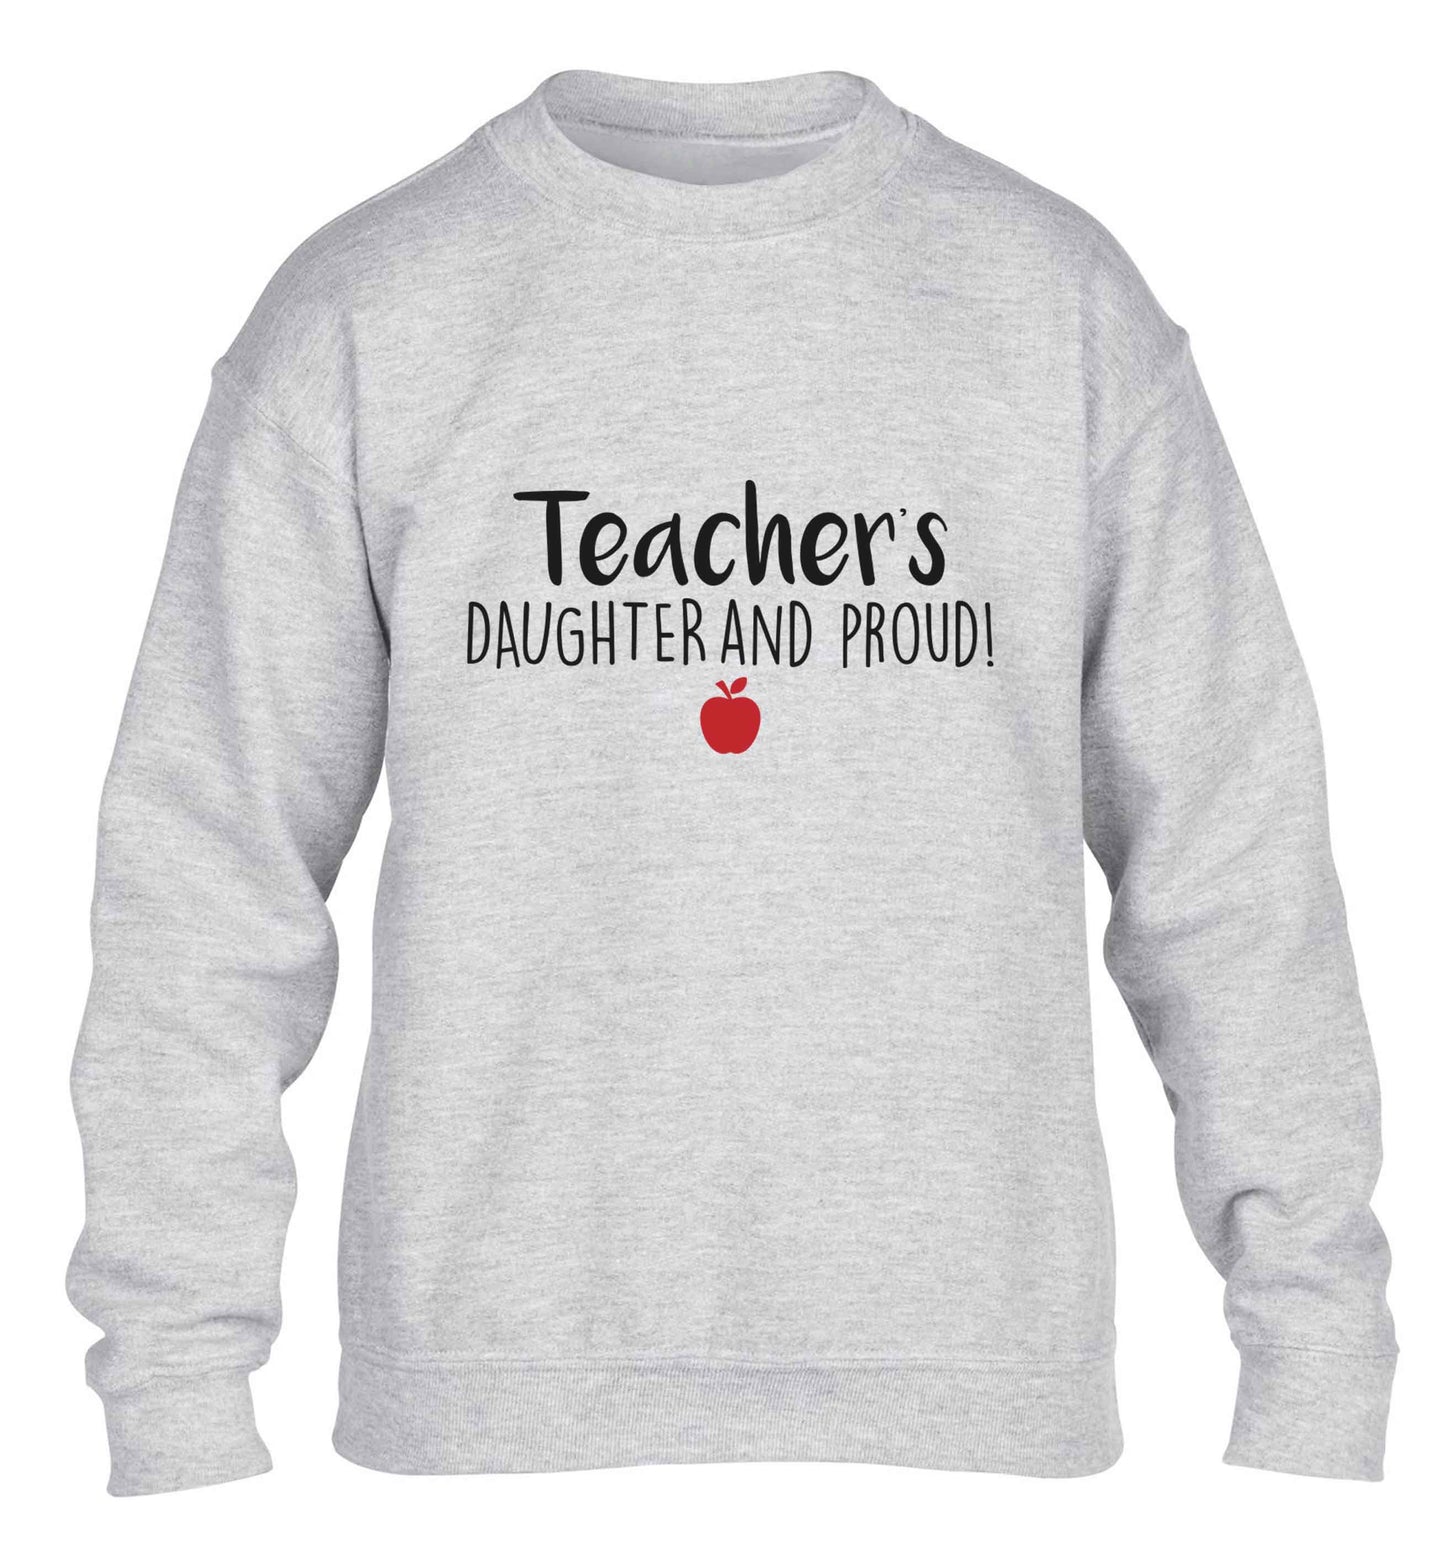 Teachers daughter and proud children's grey sweater 12-13 Years